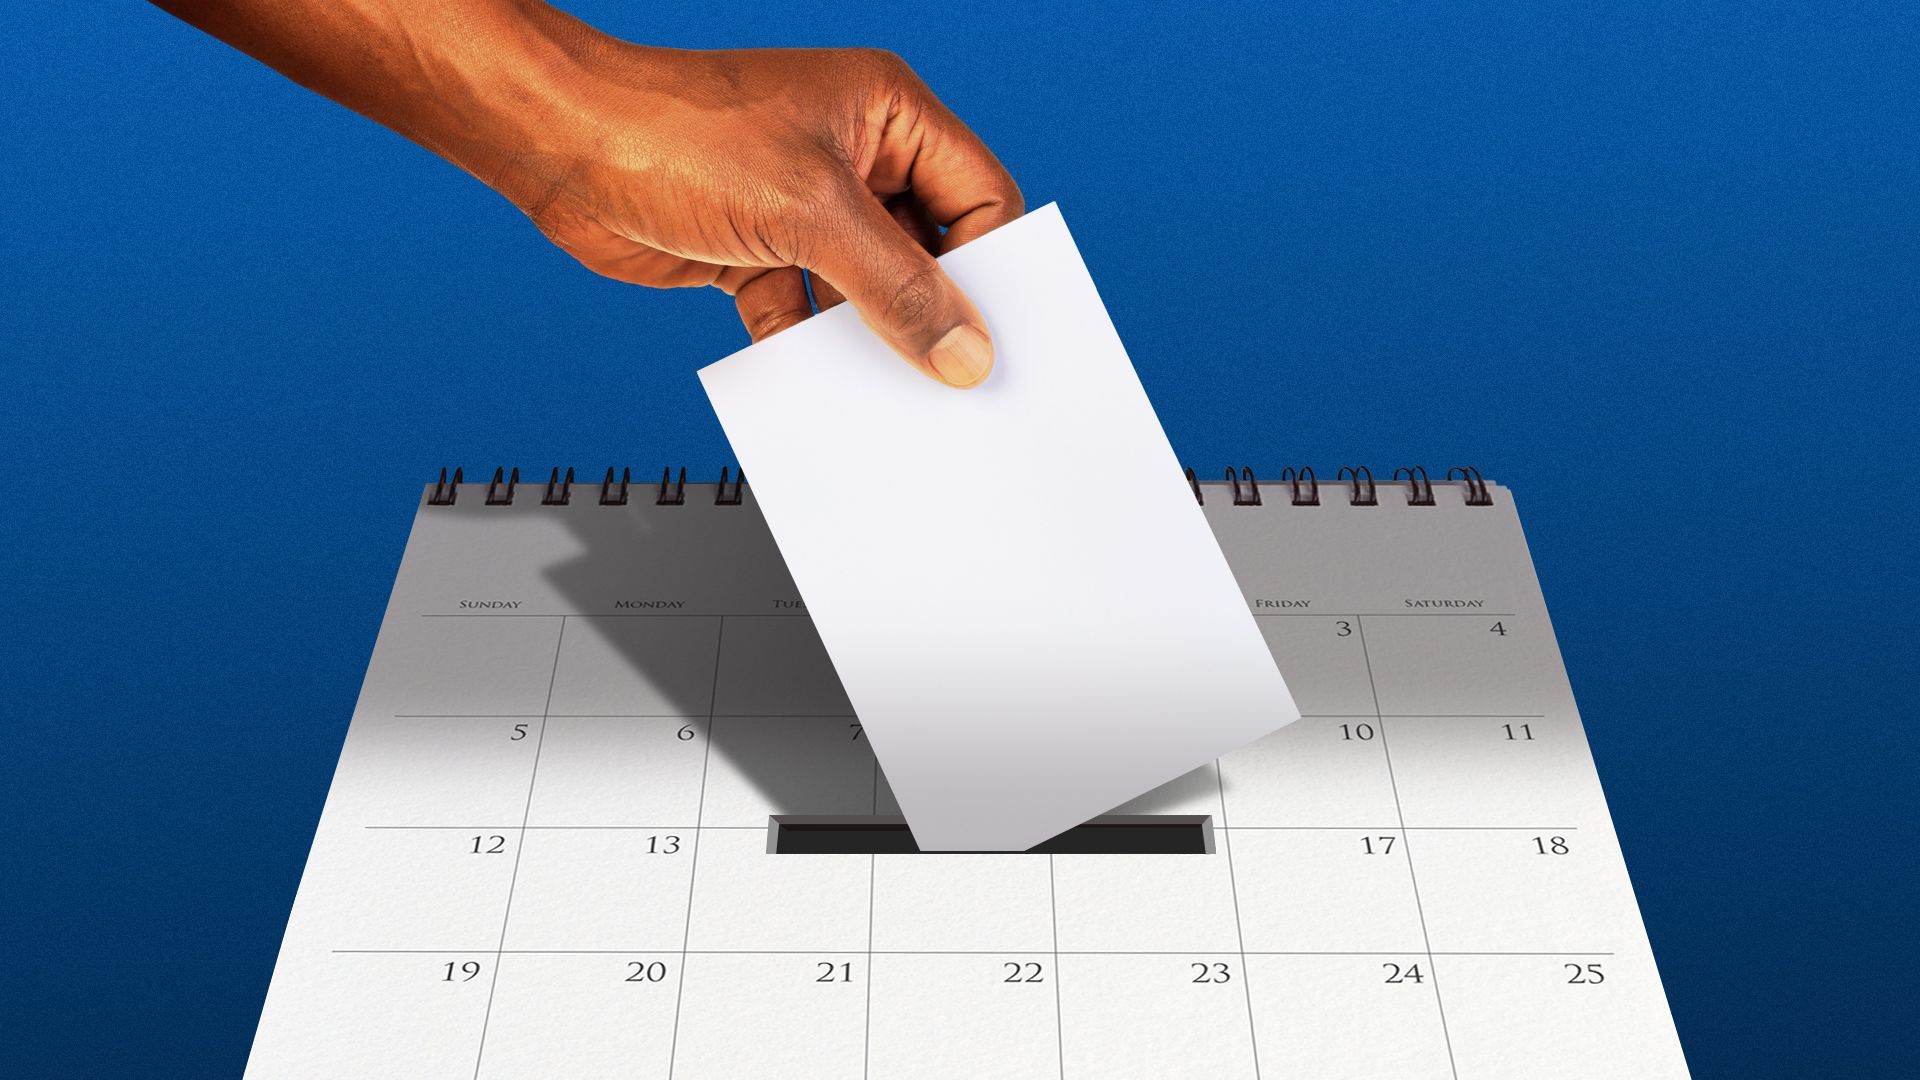 Illustration of a hand casting a ballot into a calendar